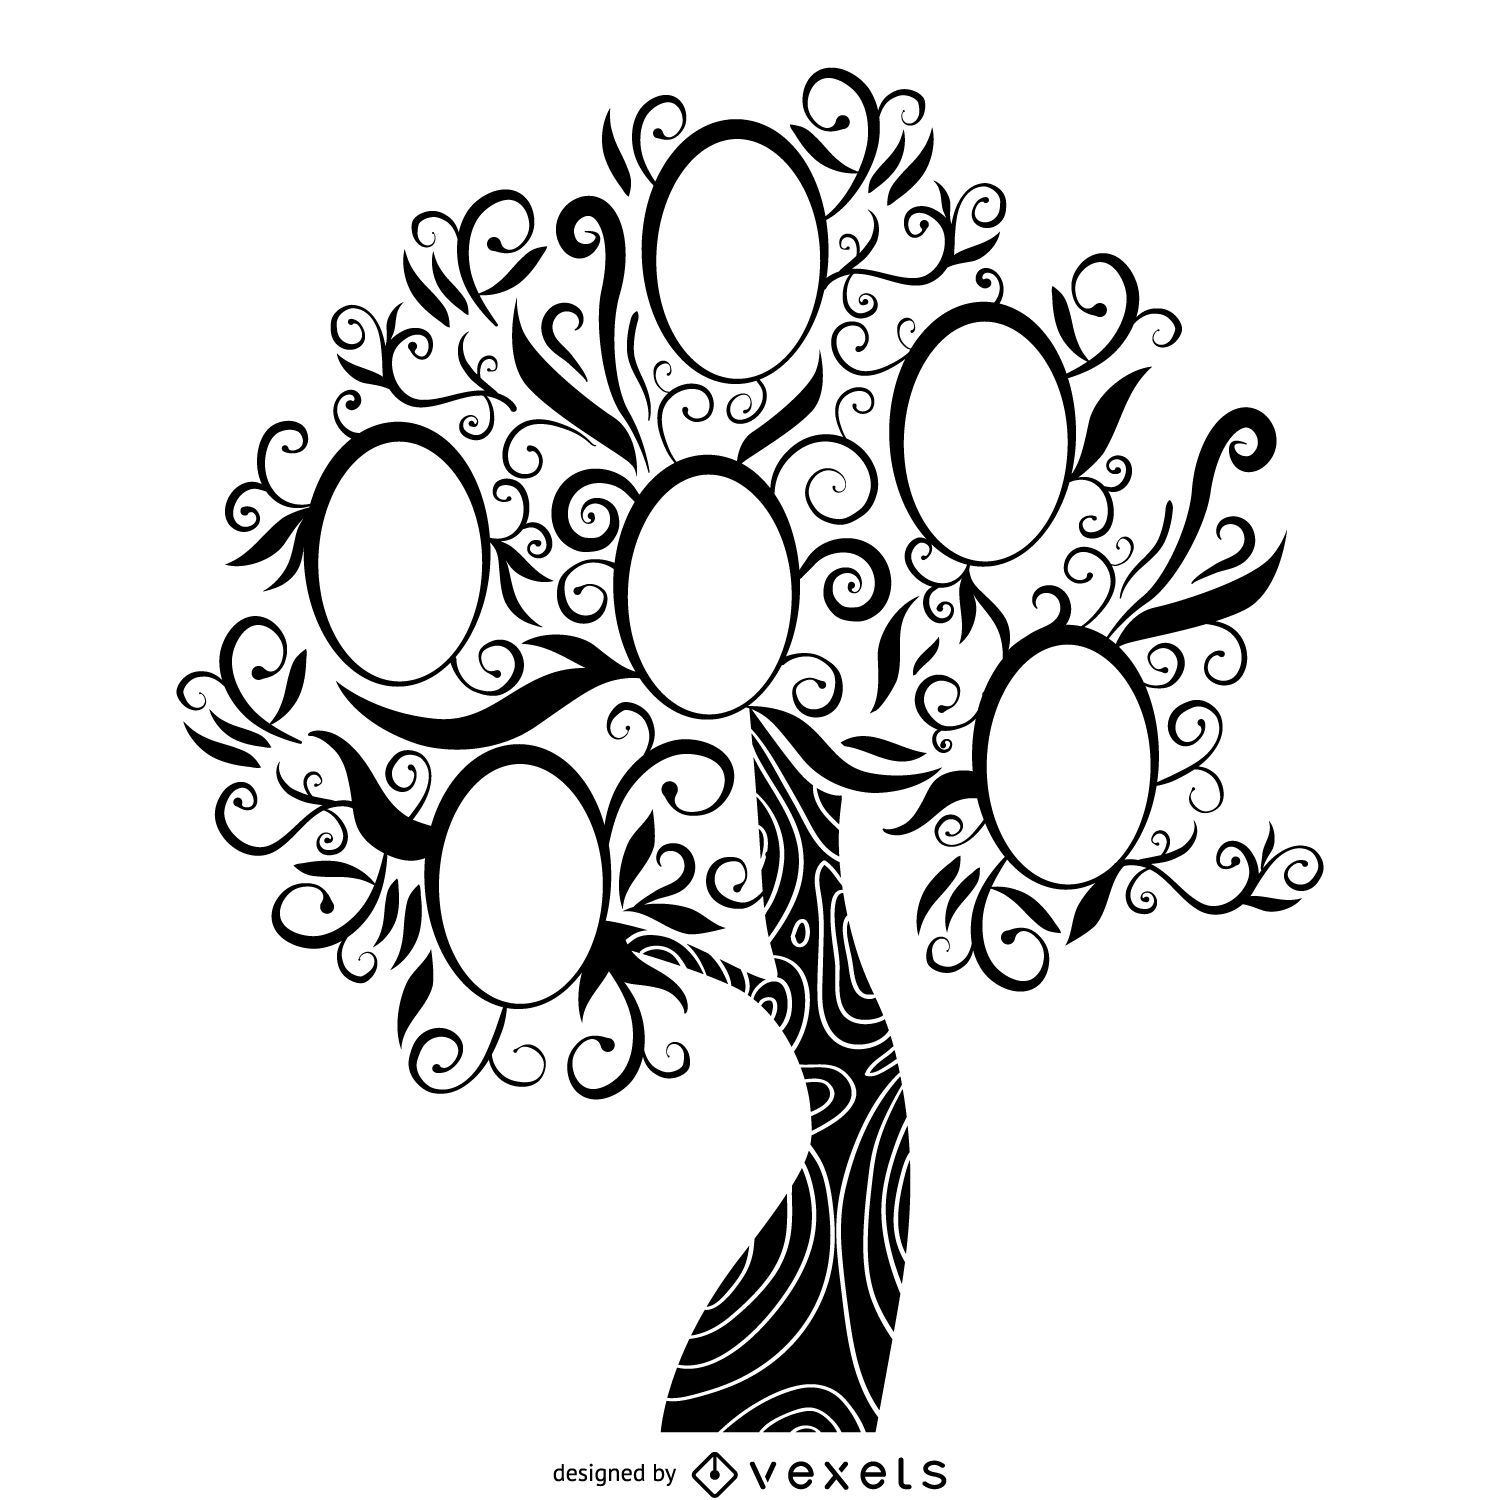 Black and white family tree